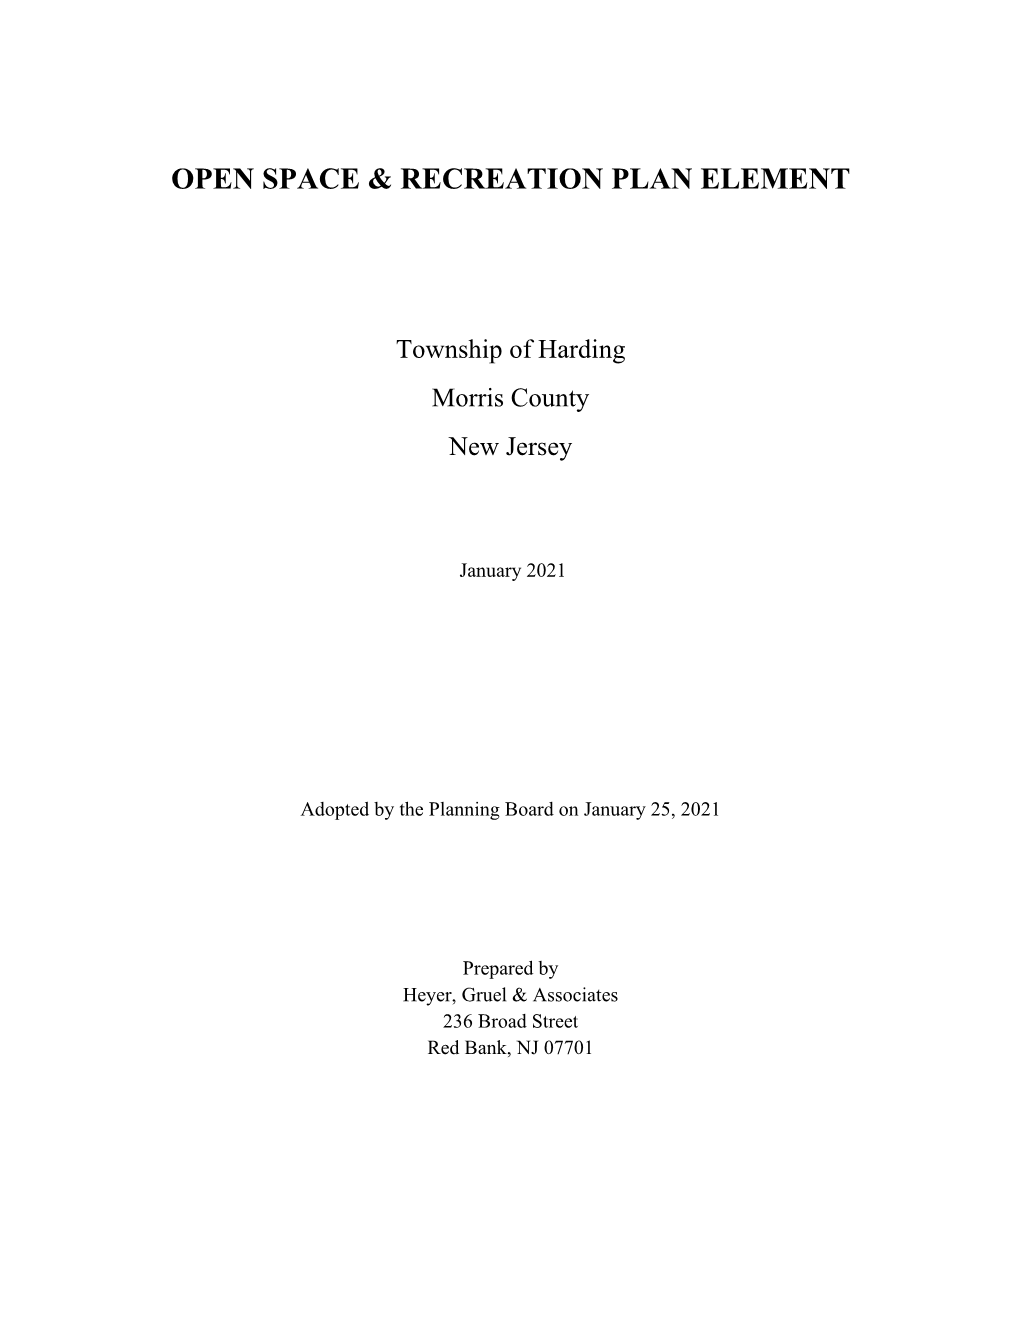 Open Space & Recreation Plan Element